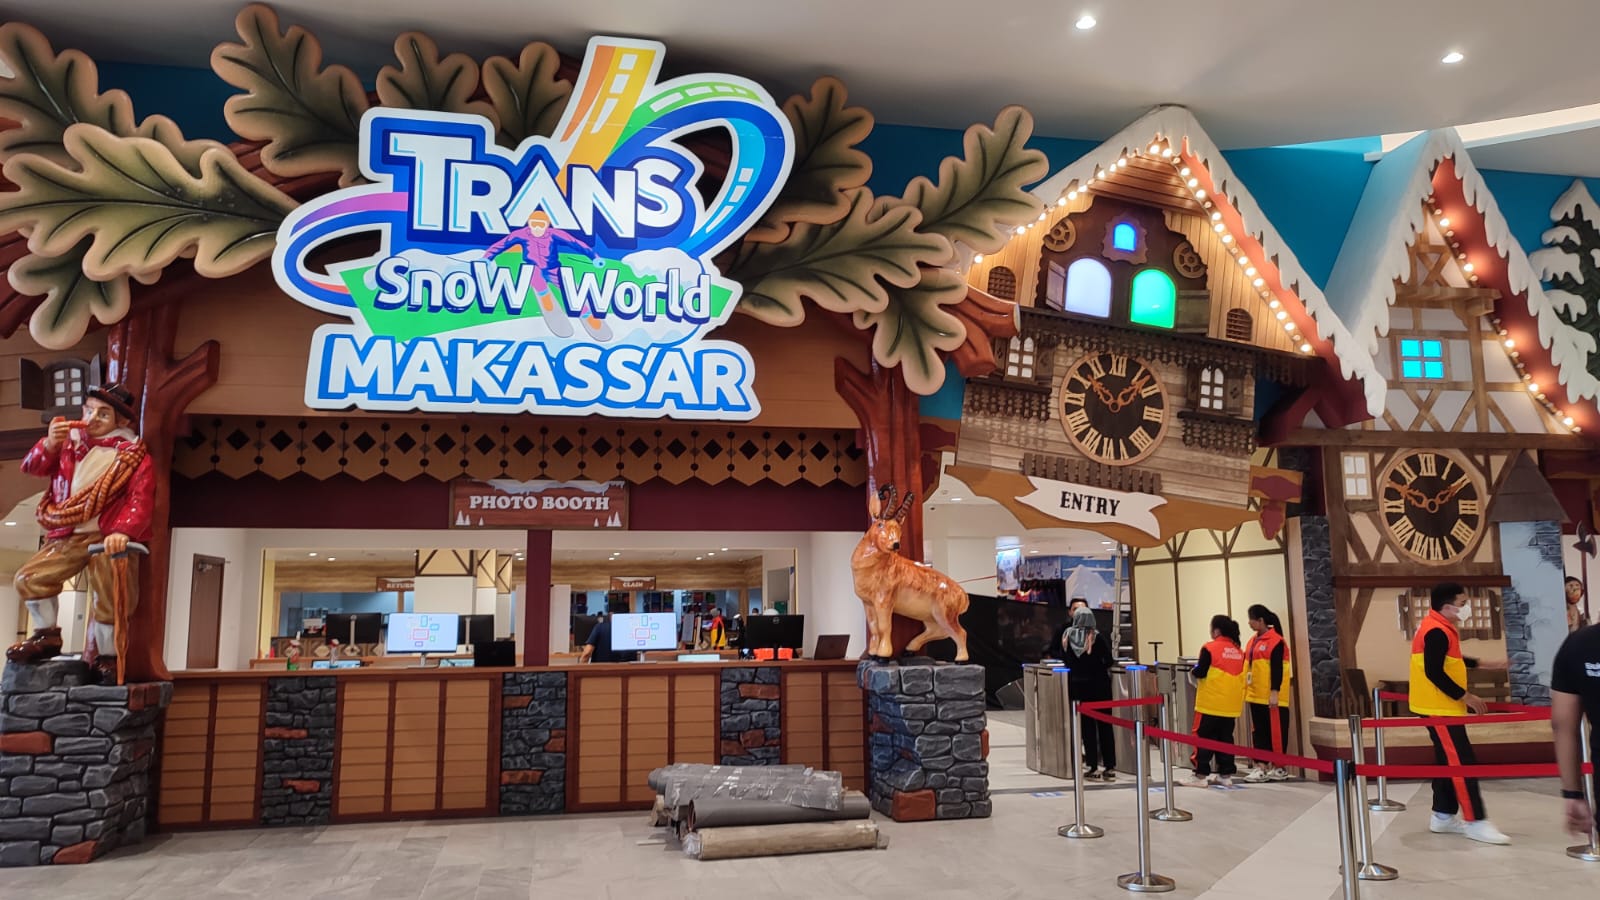 Trans Snow World Makassar Buka Kembali 26 Mei 2023